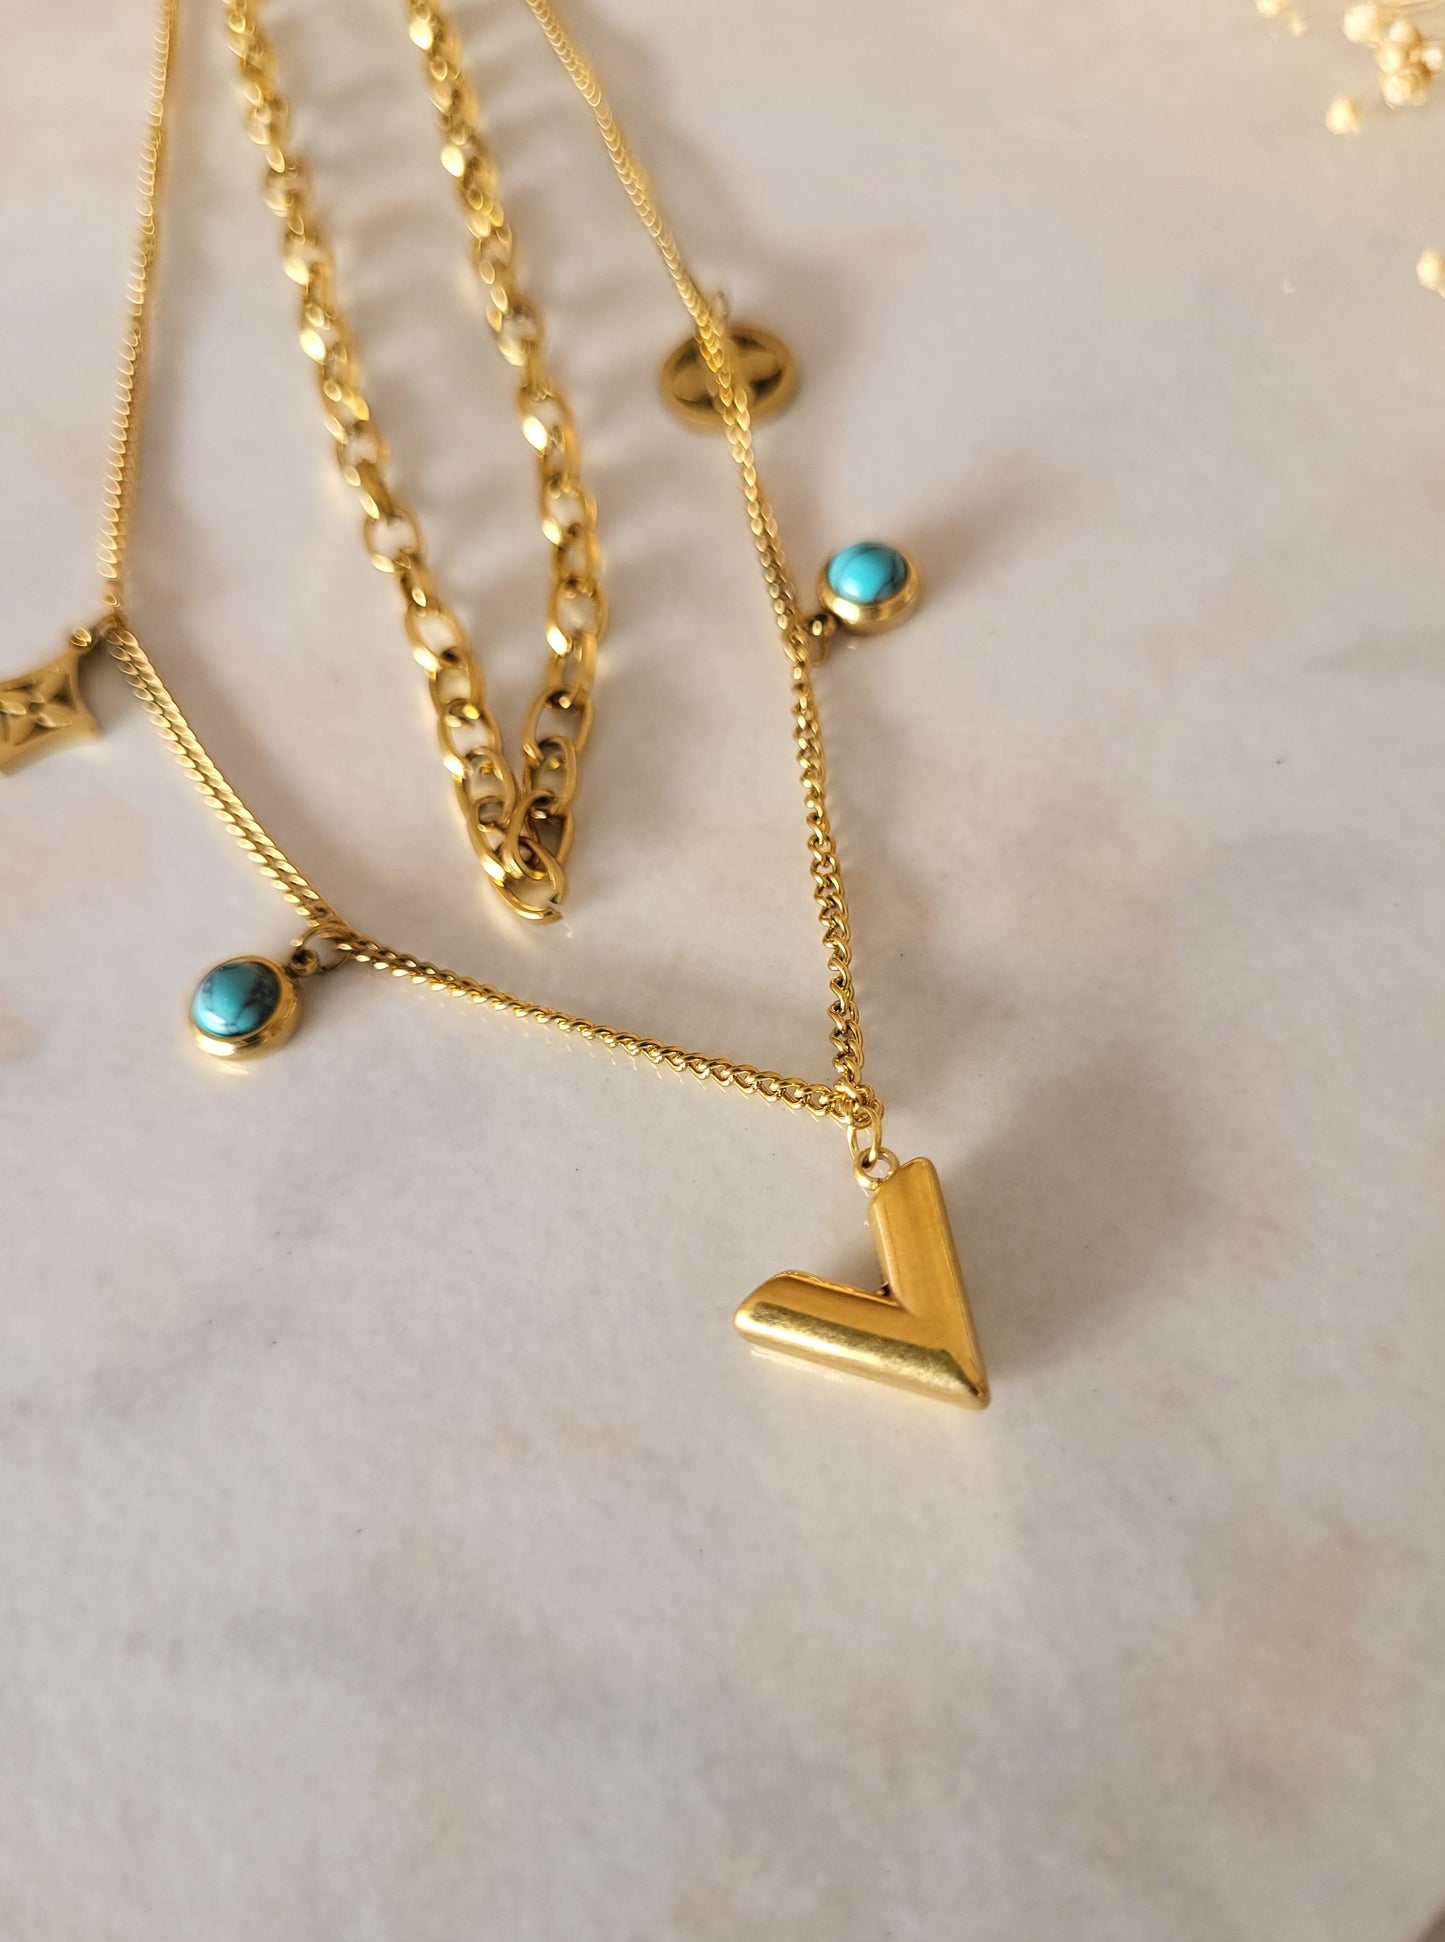 Double Layer Necklace - Turquoise Stone / "V" Pendant